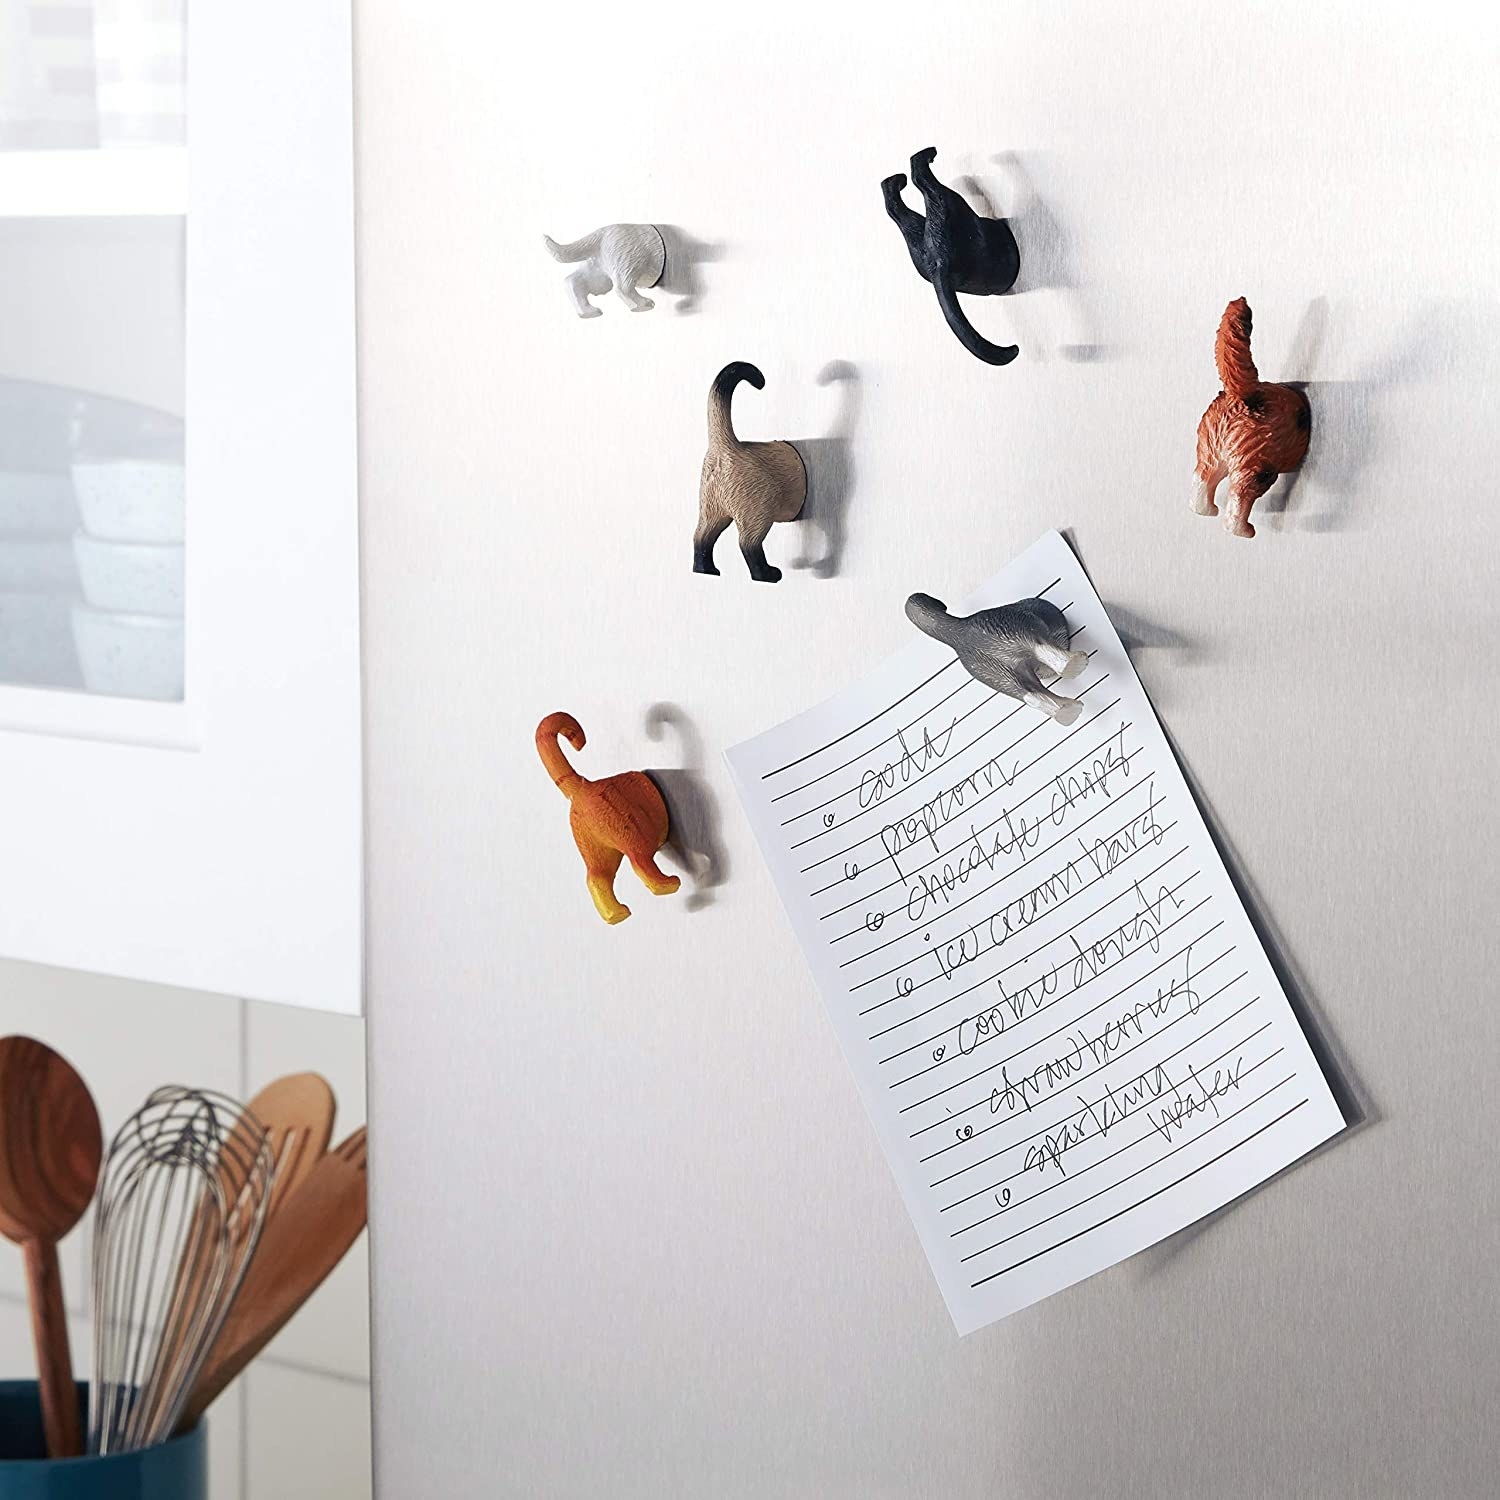 A cat-shaped magnet holding up a sheet of paper on a fridge door